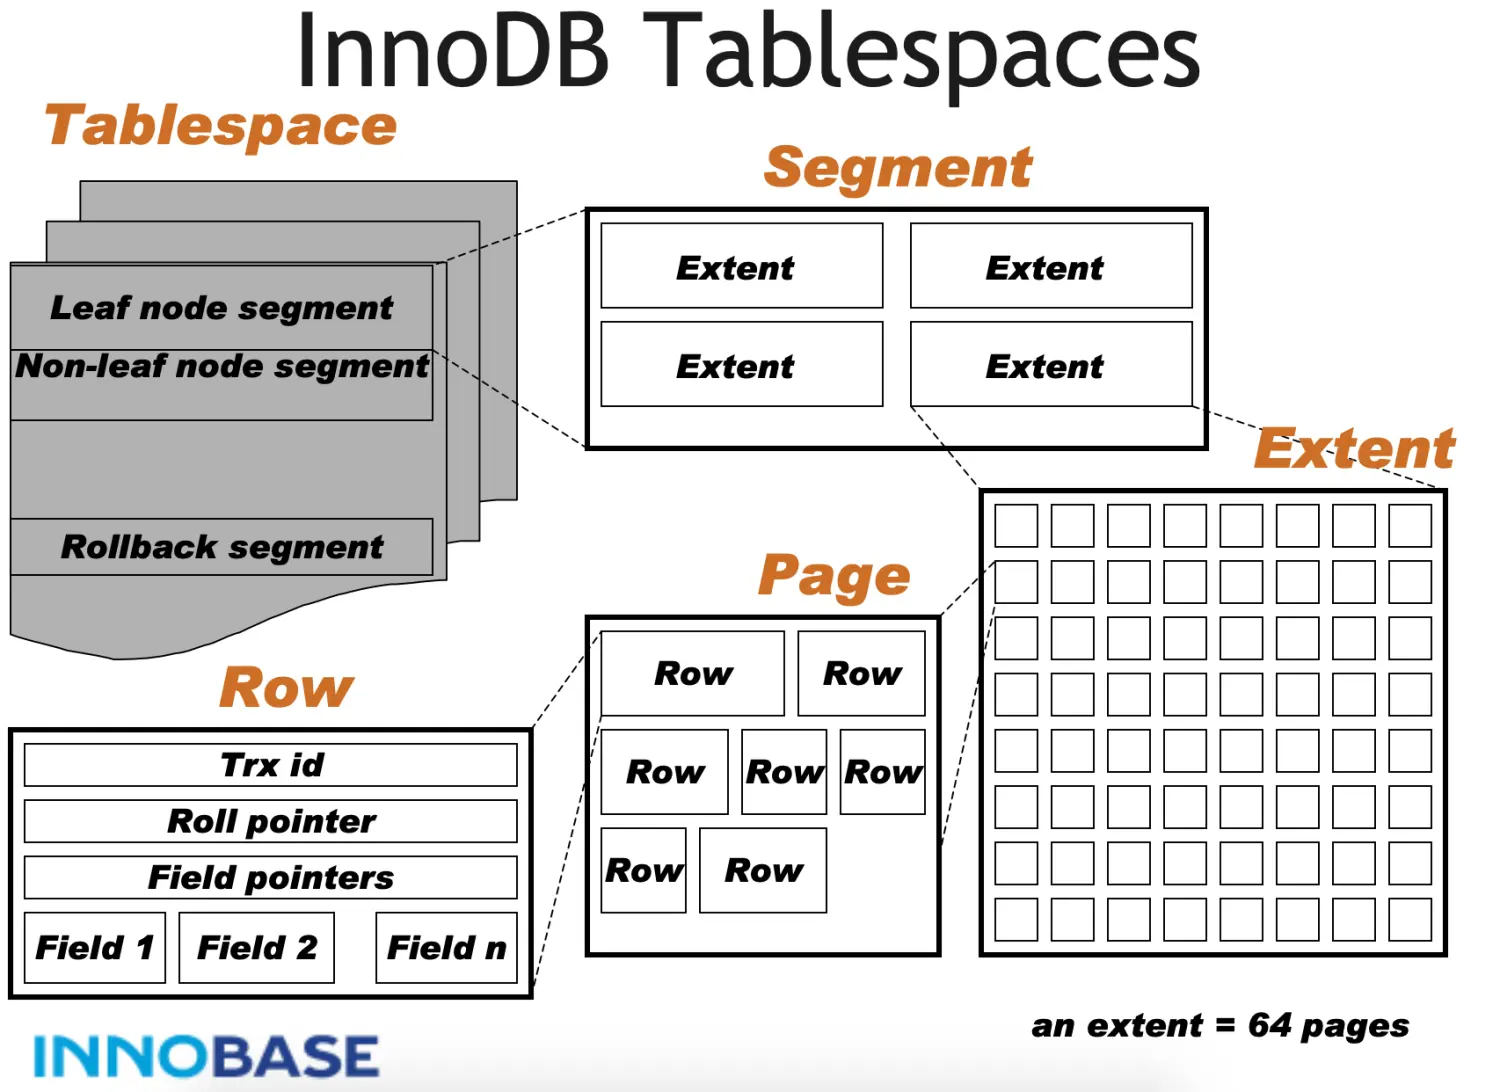 InnoDB Tablespaces